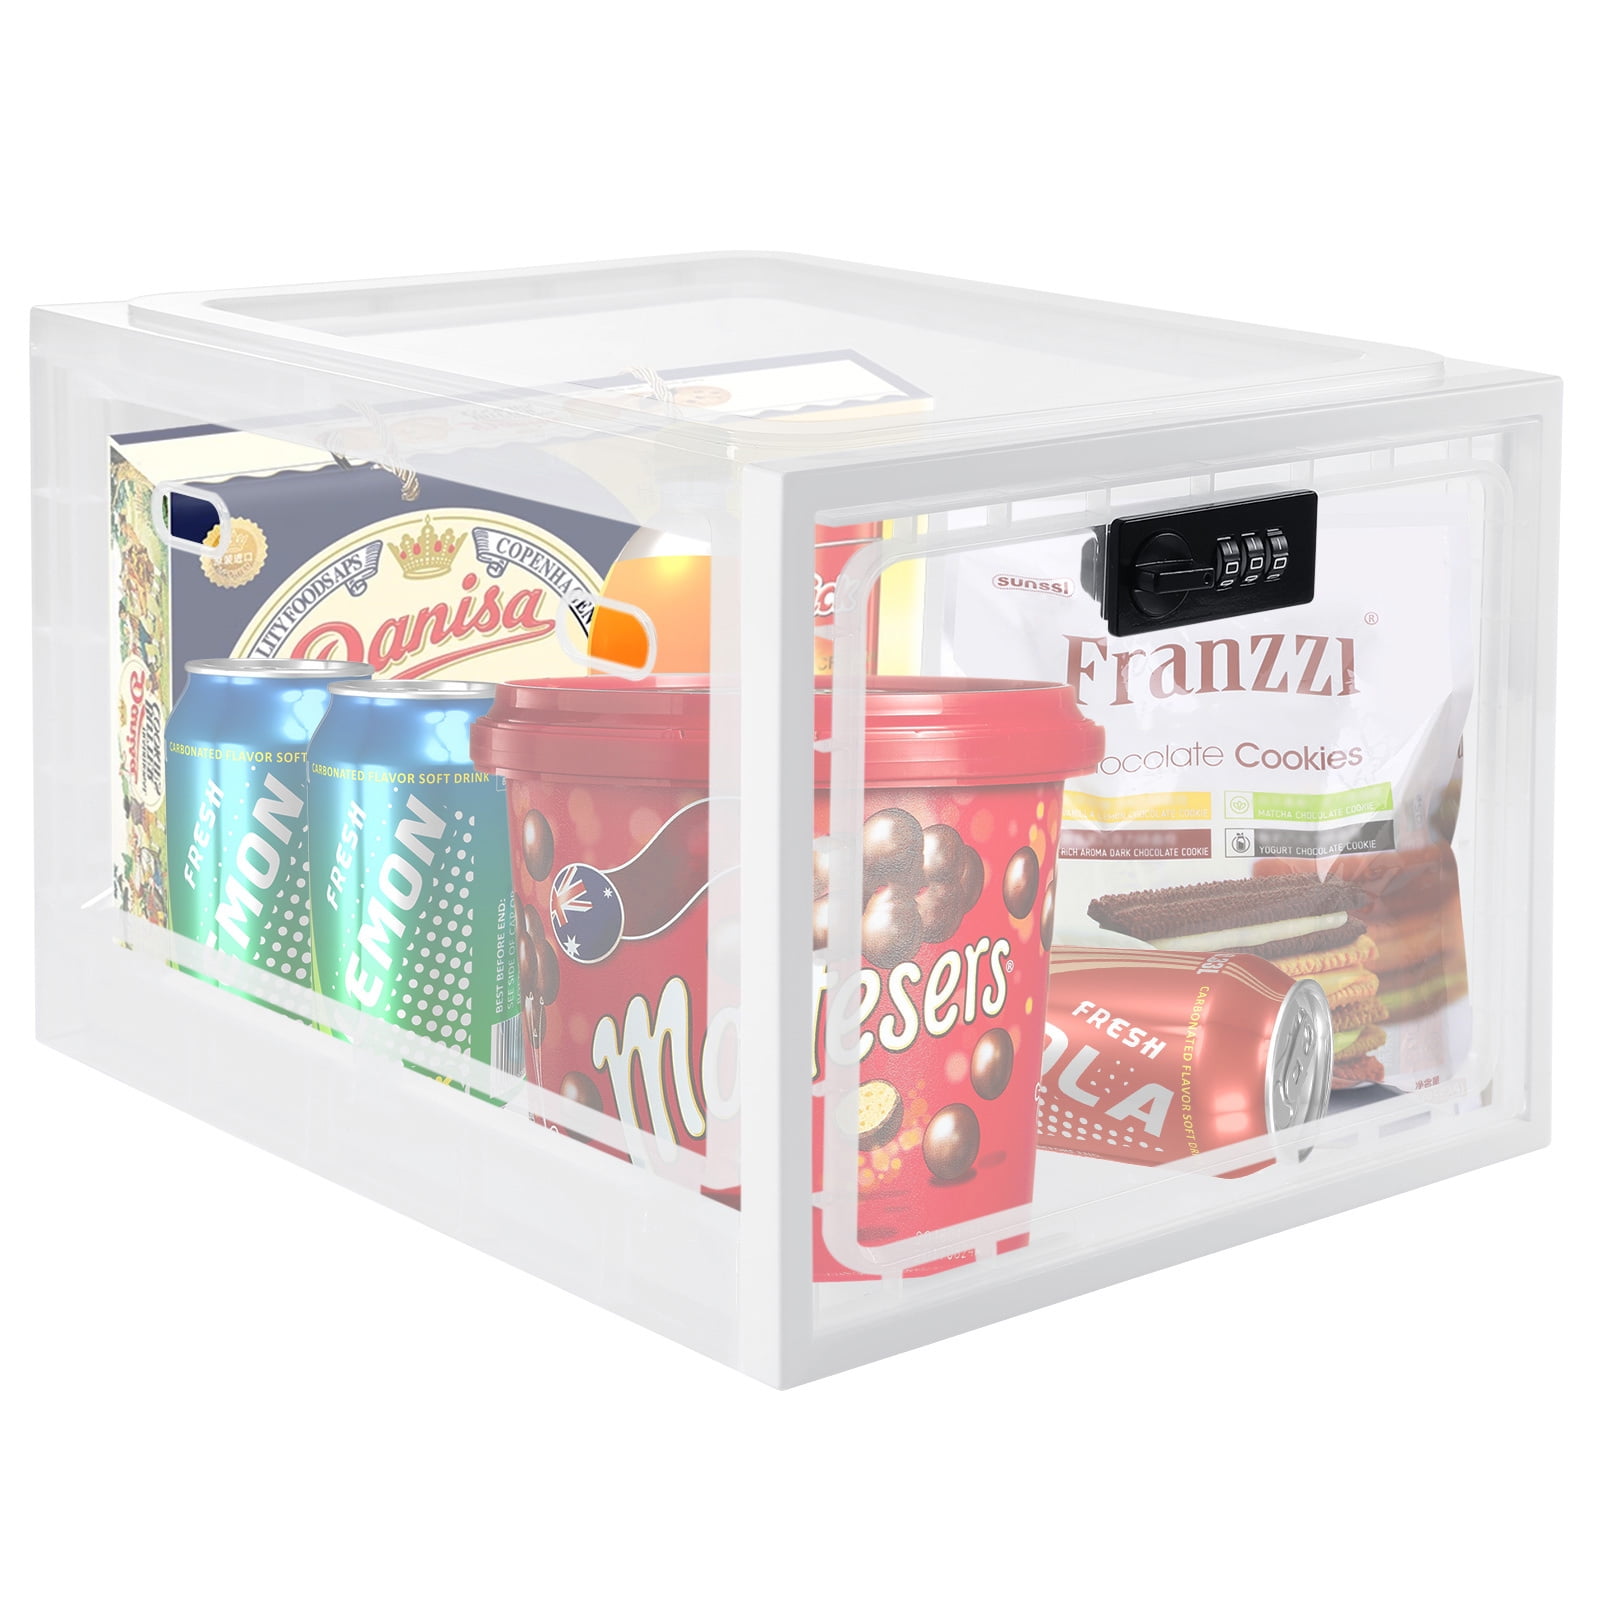 Clear Acrylic Refrigerator Lock Box